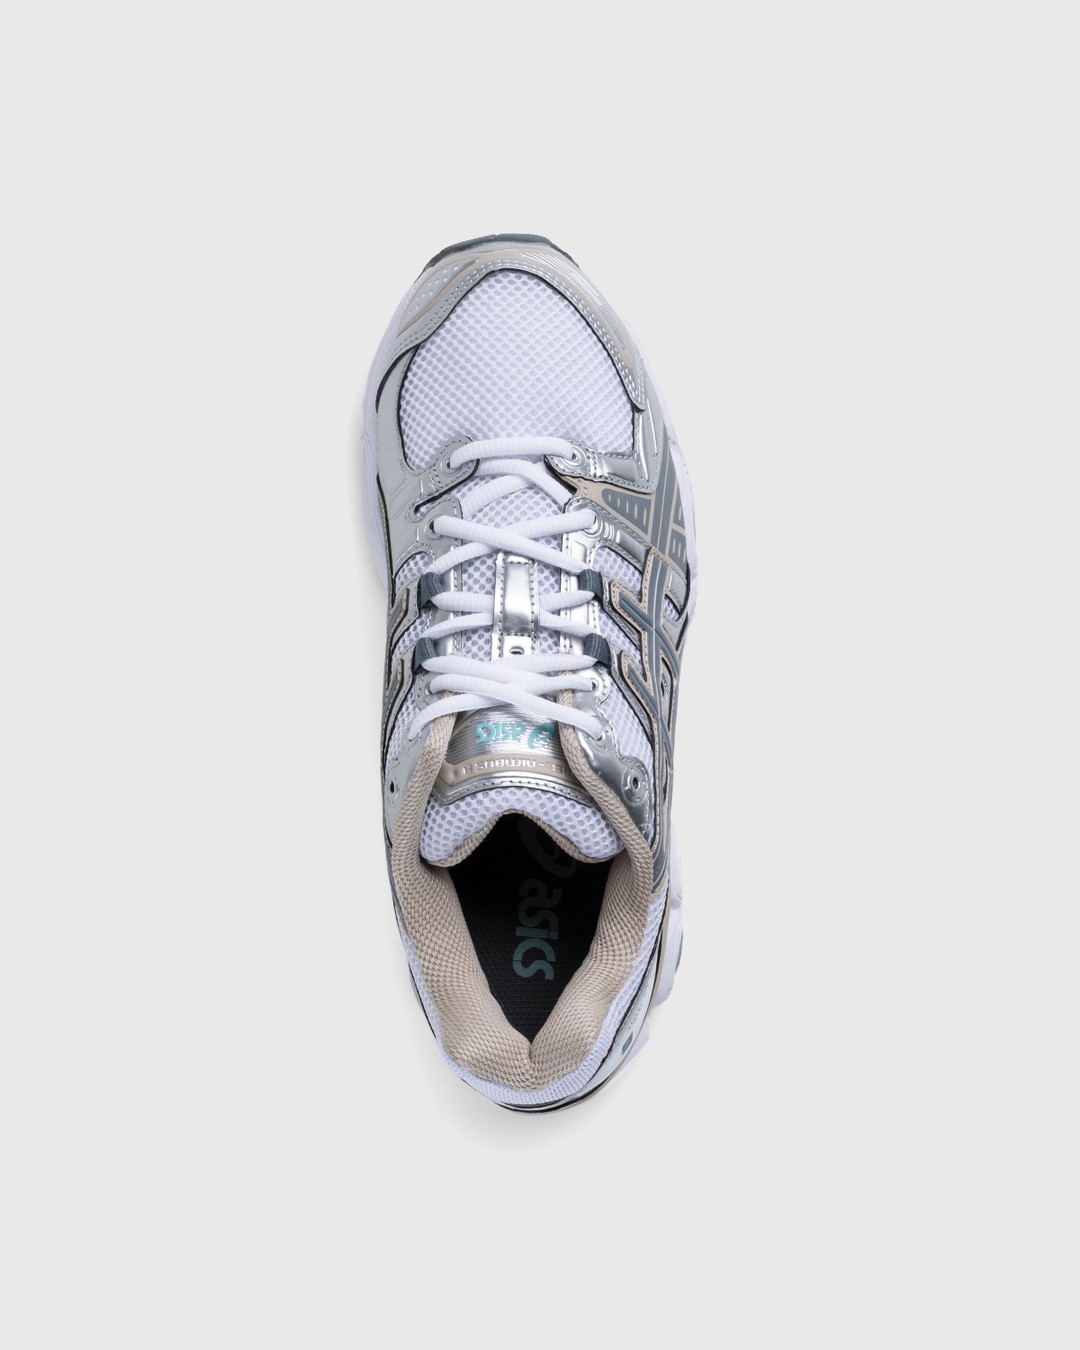 asics – Gel-Nimbus 9 White/Steel Grey - Low Top Sneakers - White - Image 4